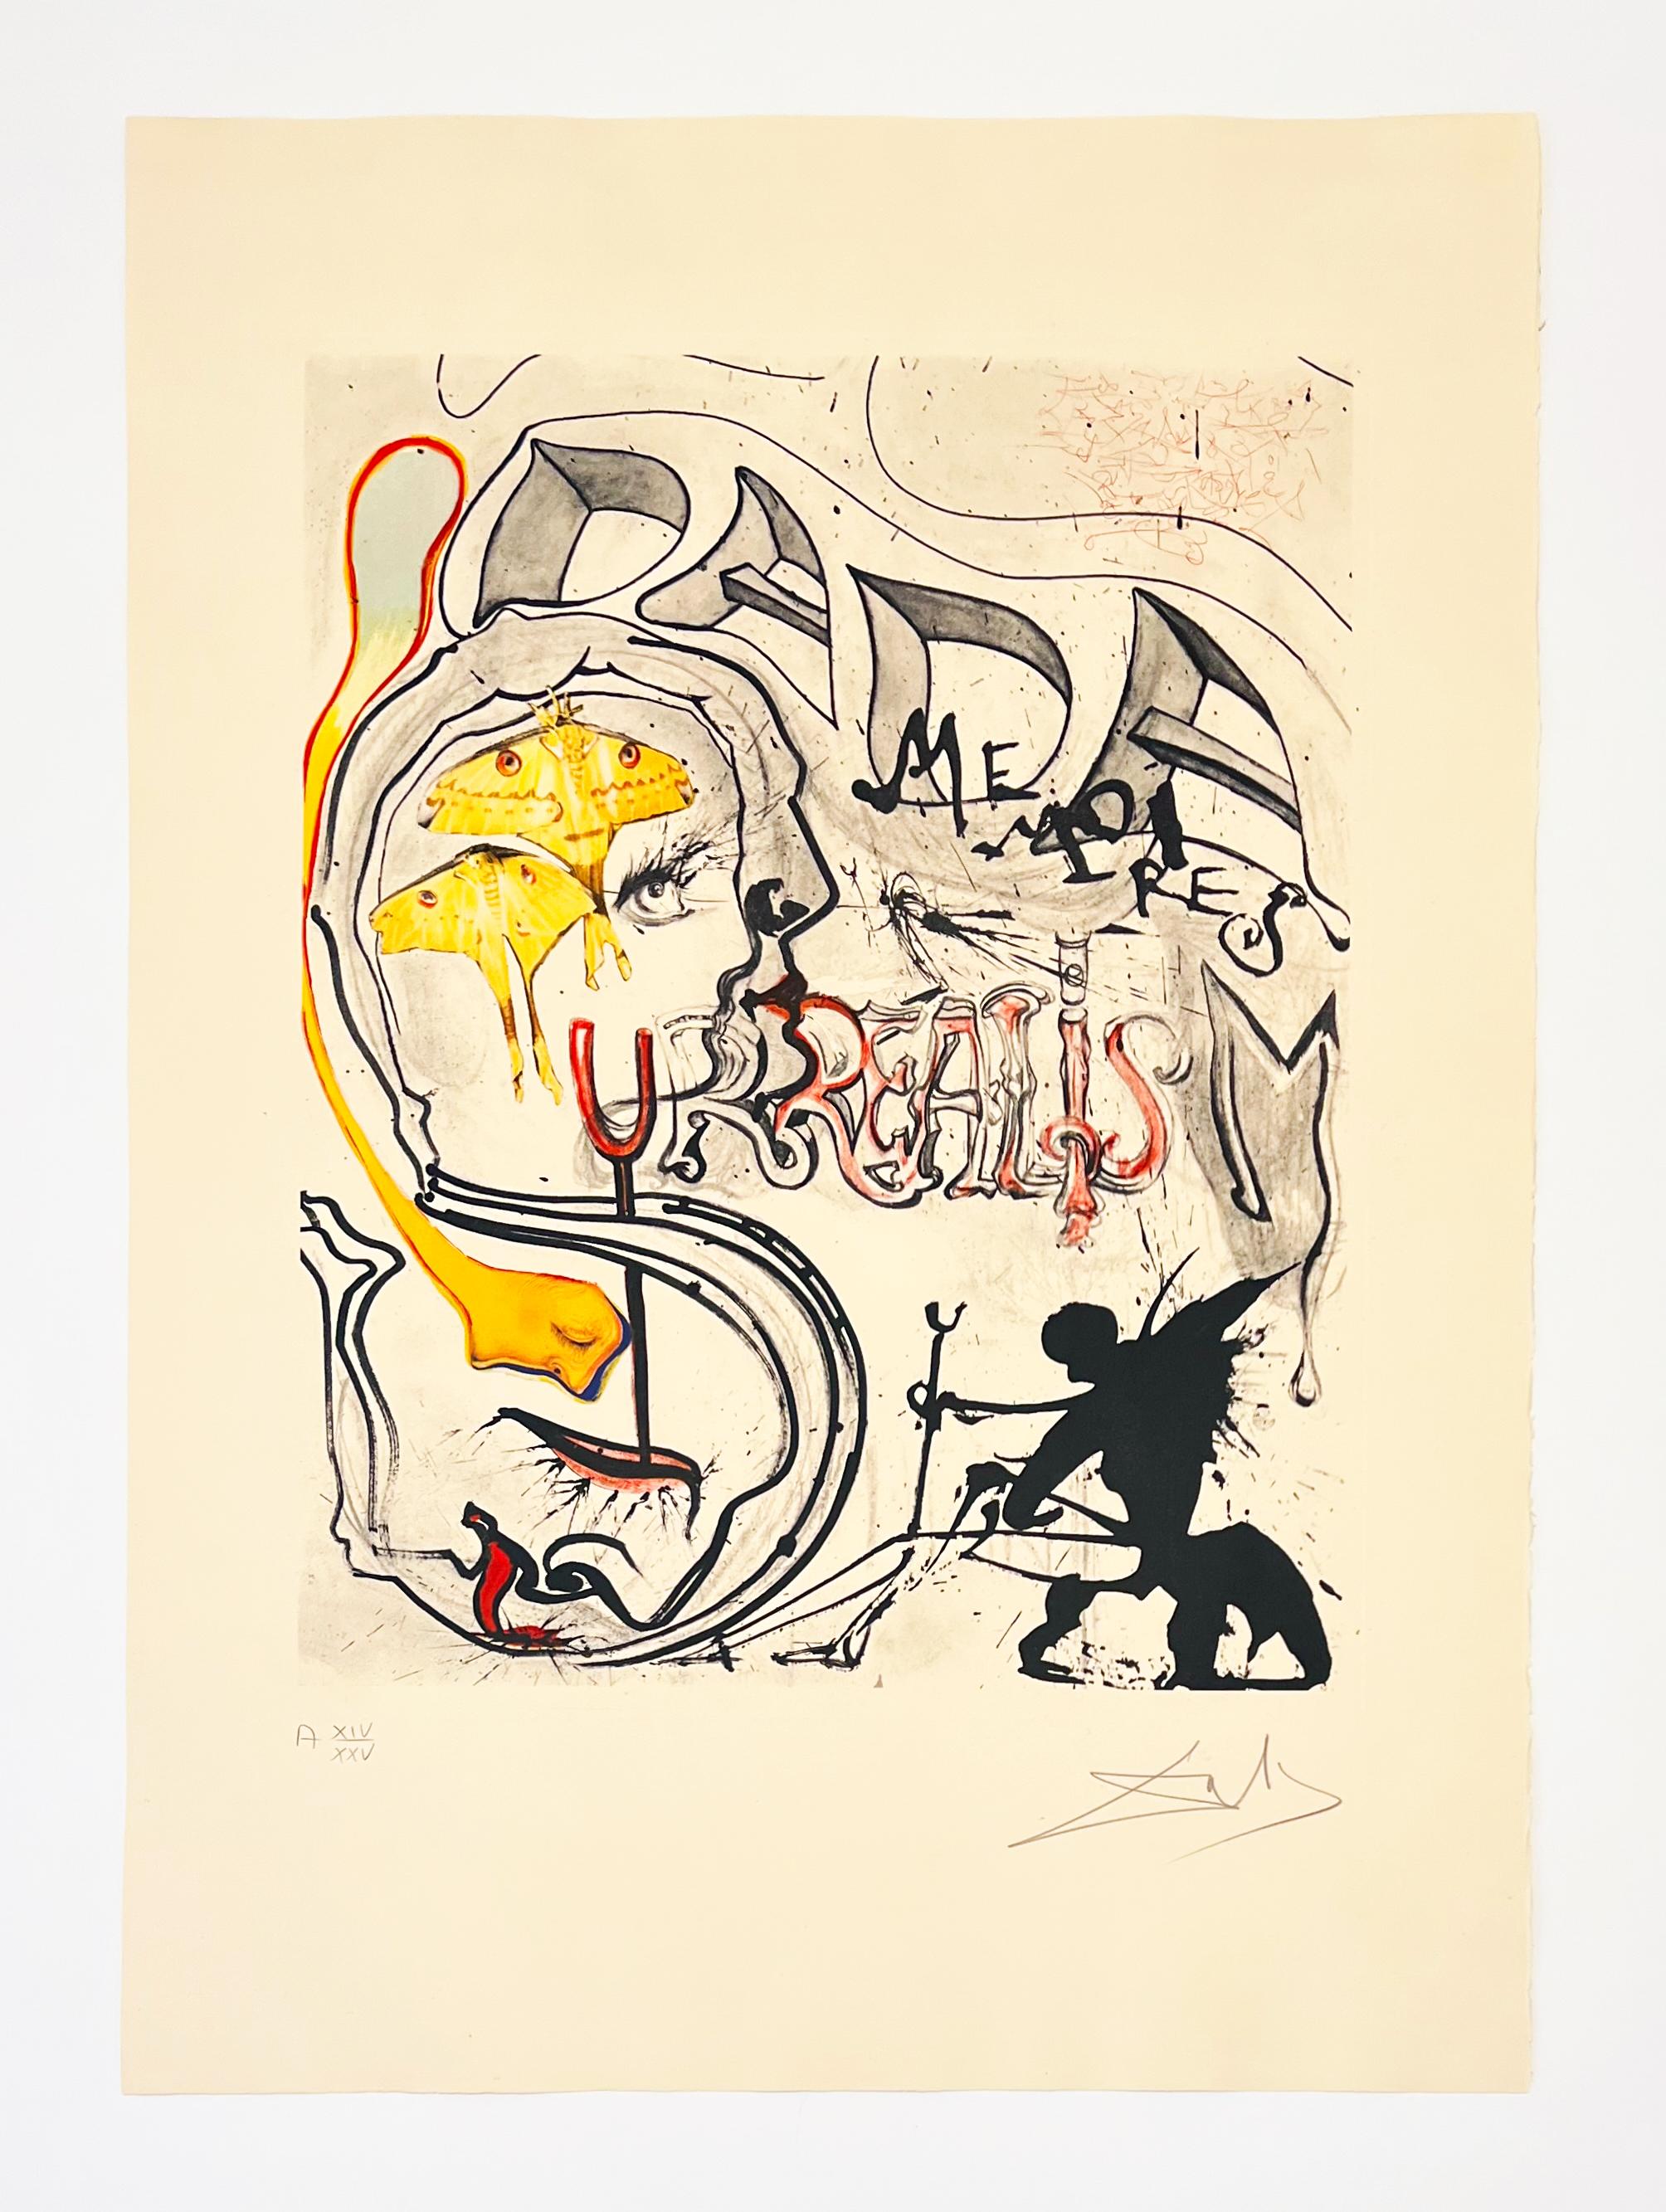 Angel of Dada Surrealism, from 1971 Memories of Surrealism - Print by Salvador Dalí